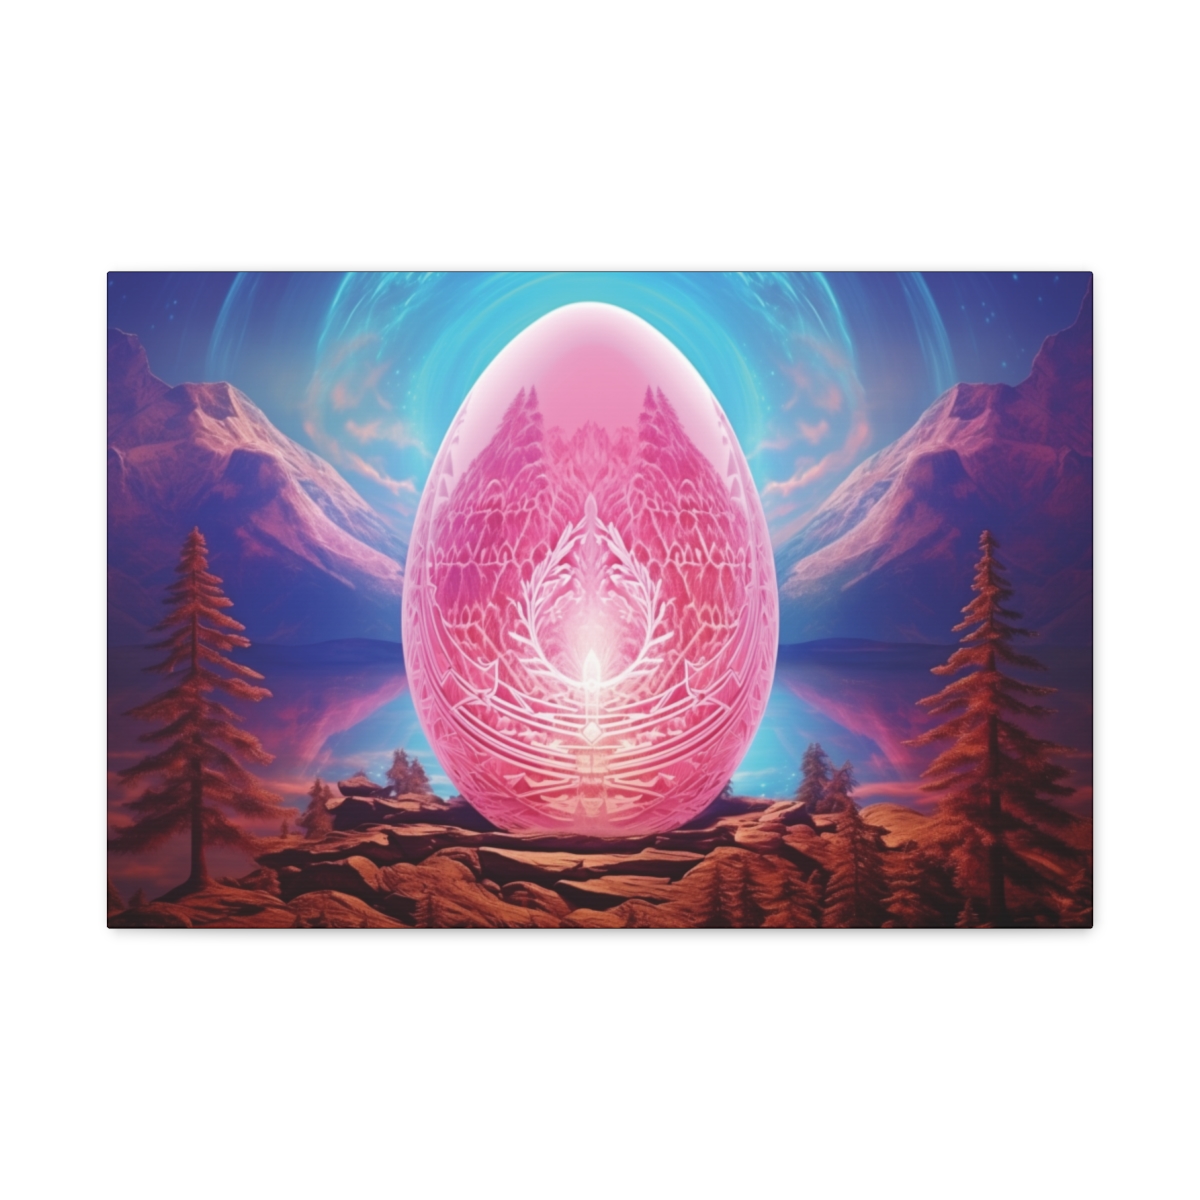 Spiritual Art: The Cosmic Egg